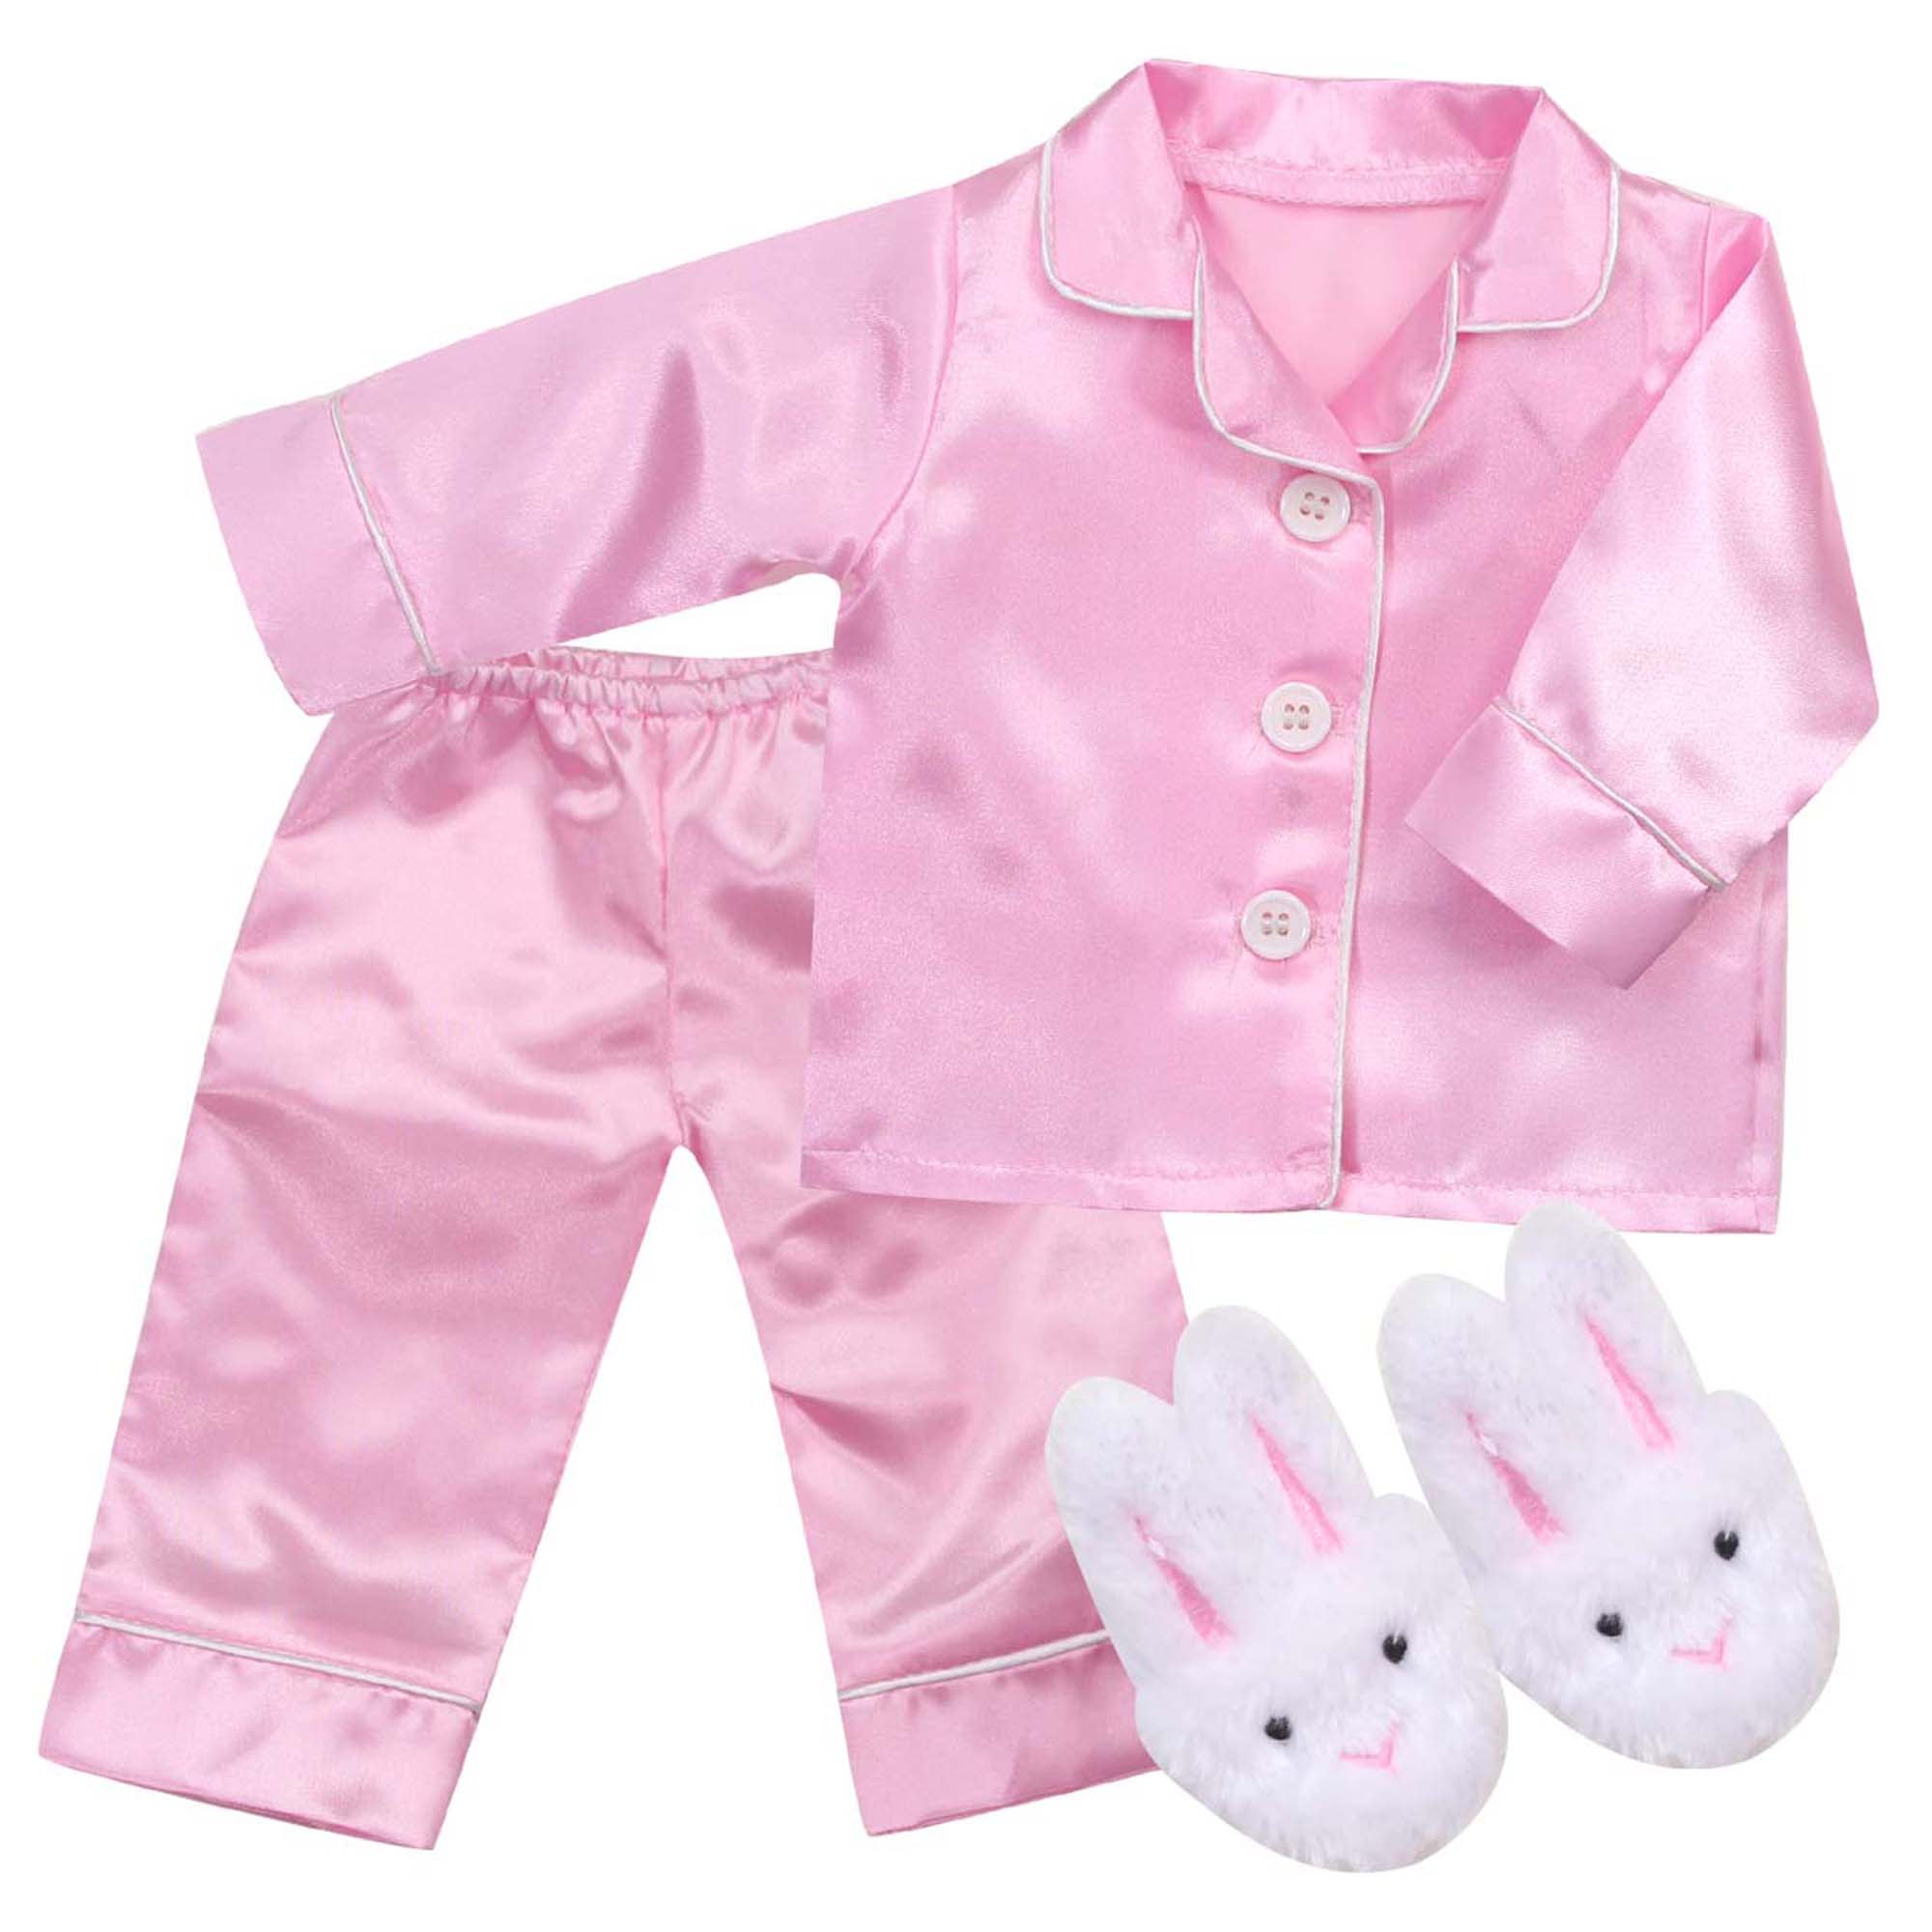 Sophia's Satin Pajama Top & Bottom Plus Bunny Slippers for 18" Dolls, Pink